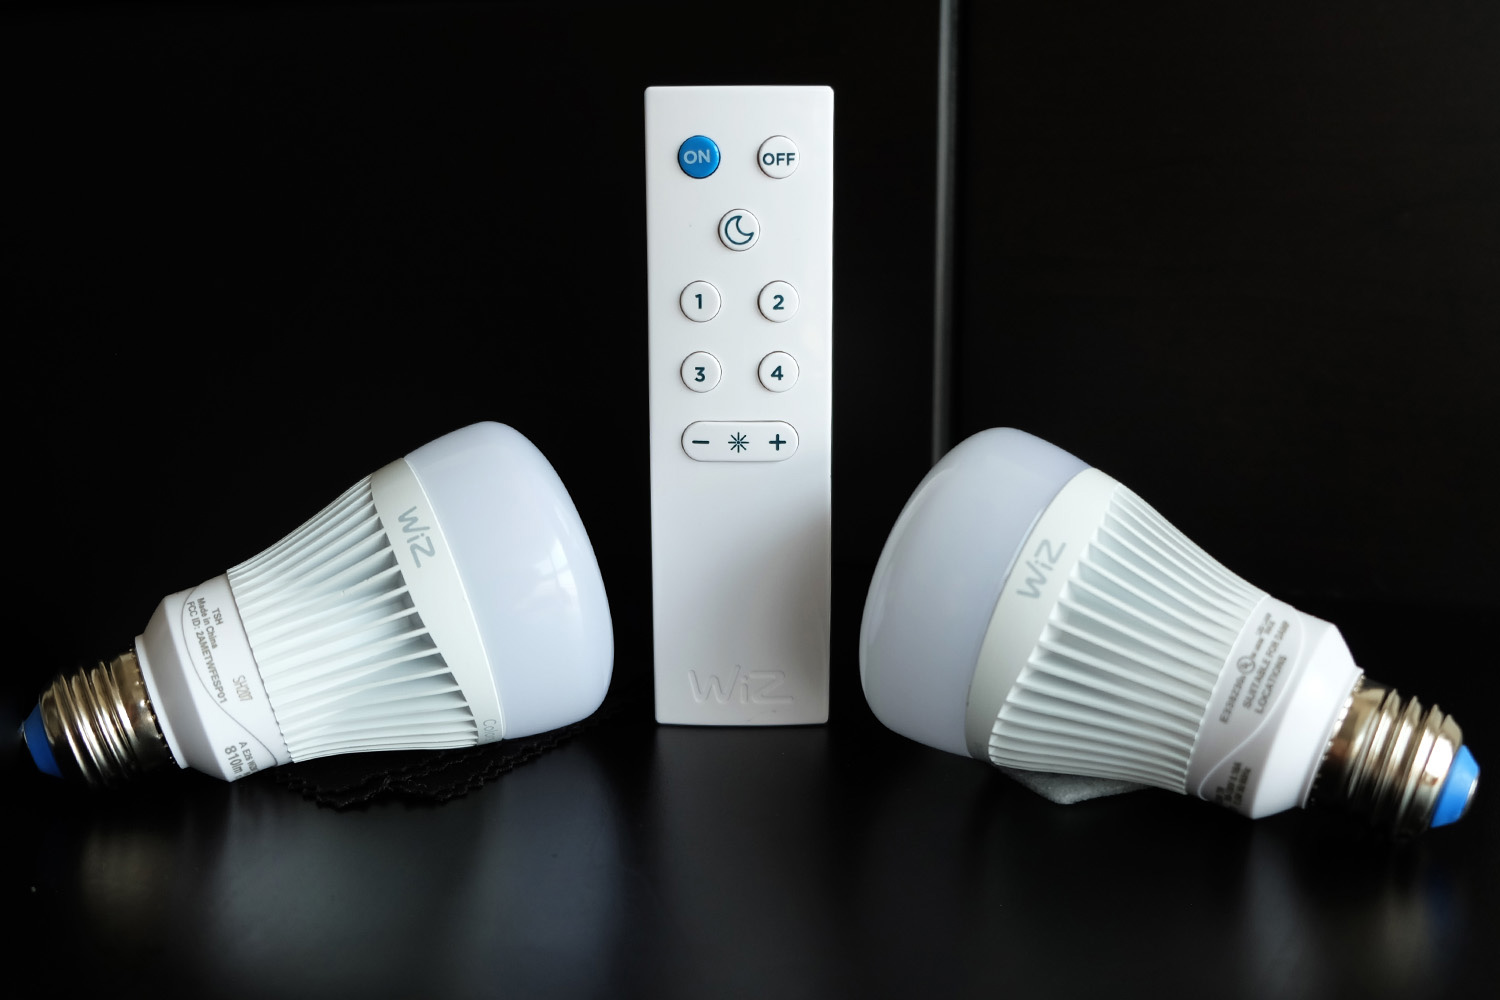 Ampoule WiZ White & Color 13W LED E27 Smart Lighting